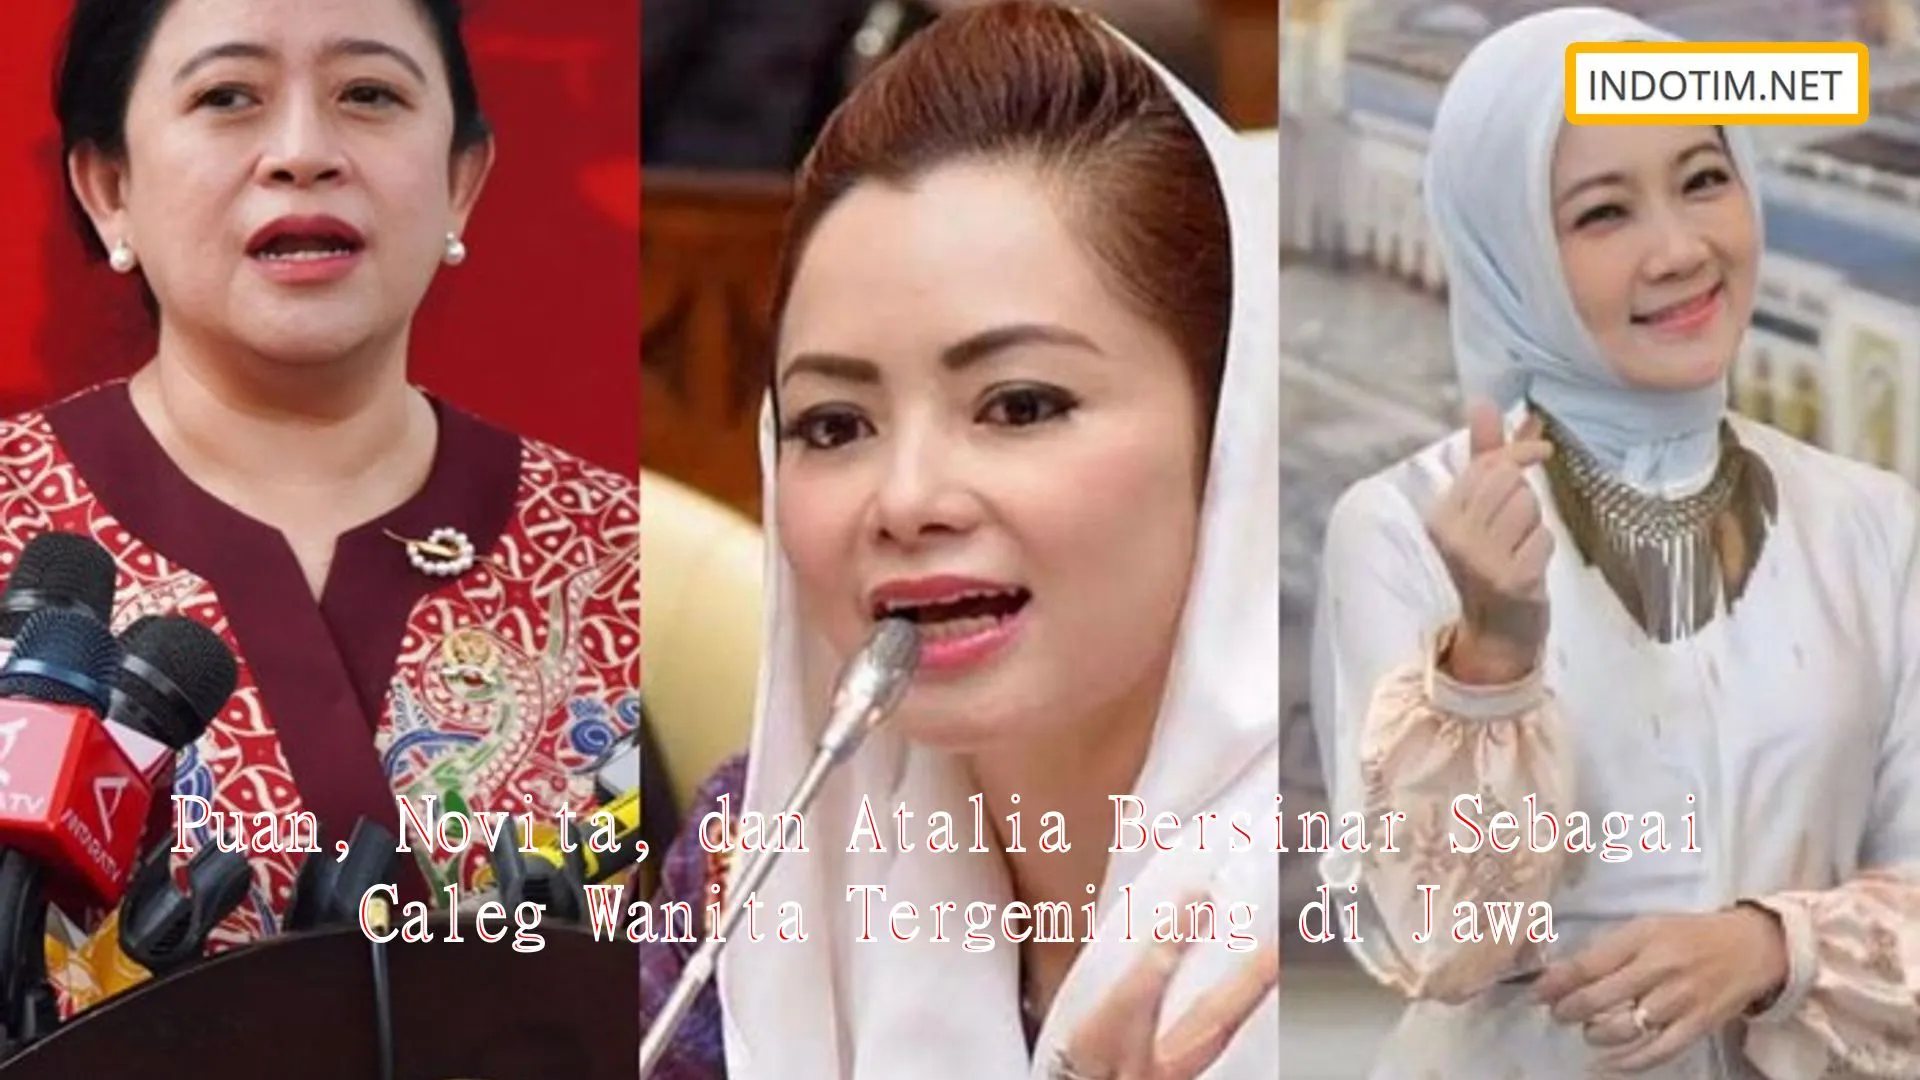 Puan, Novita, dan Atalia Bersinar Sebagai Caleg Wanita Tergemilang di Jawa